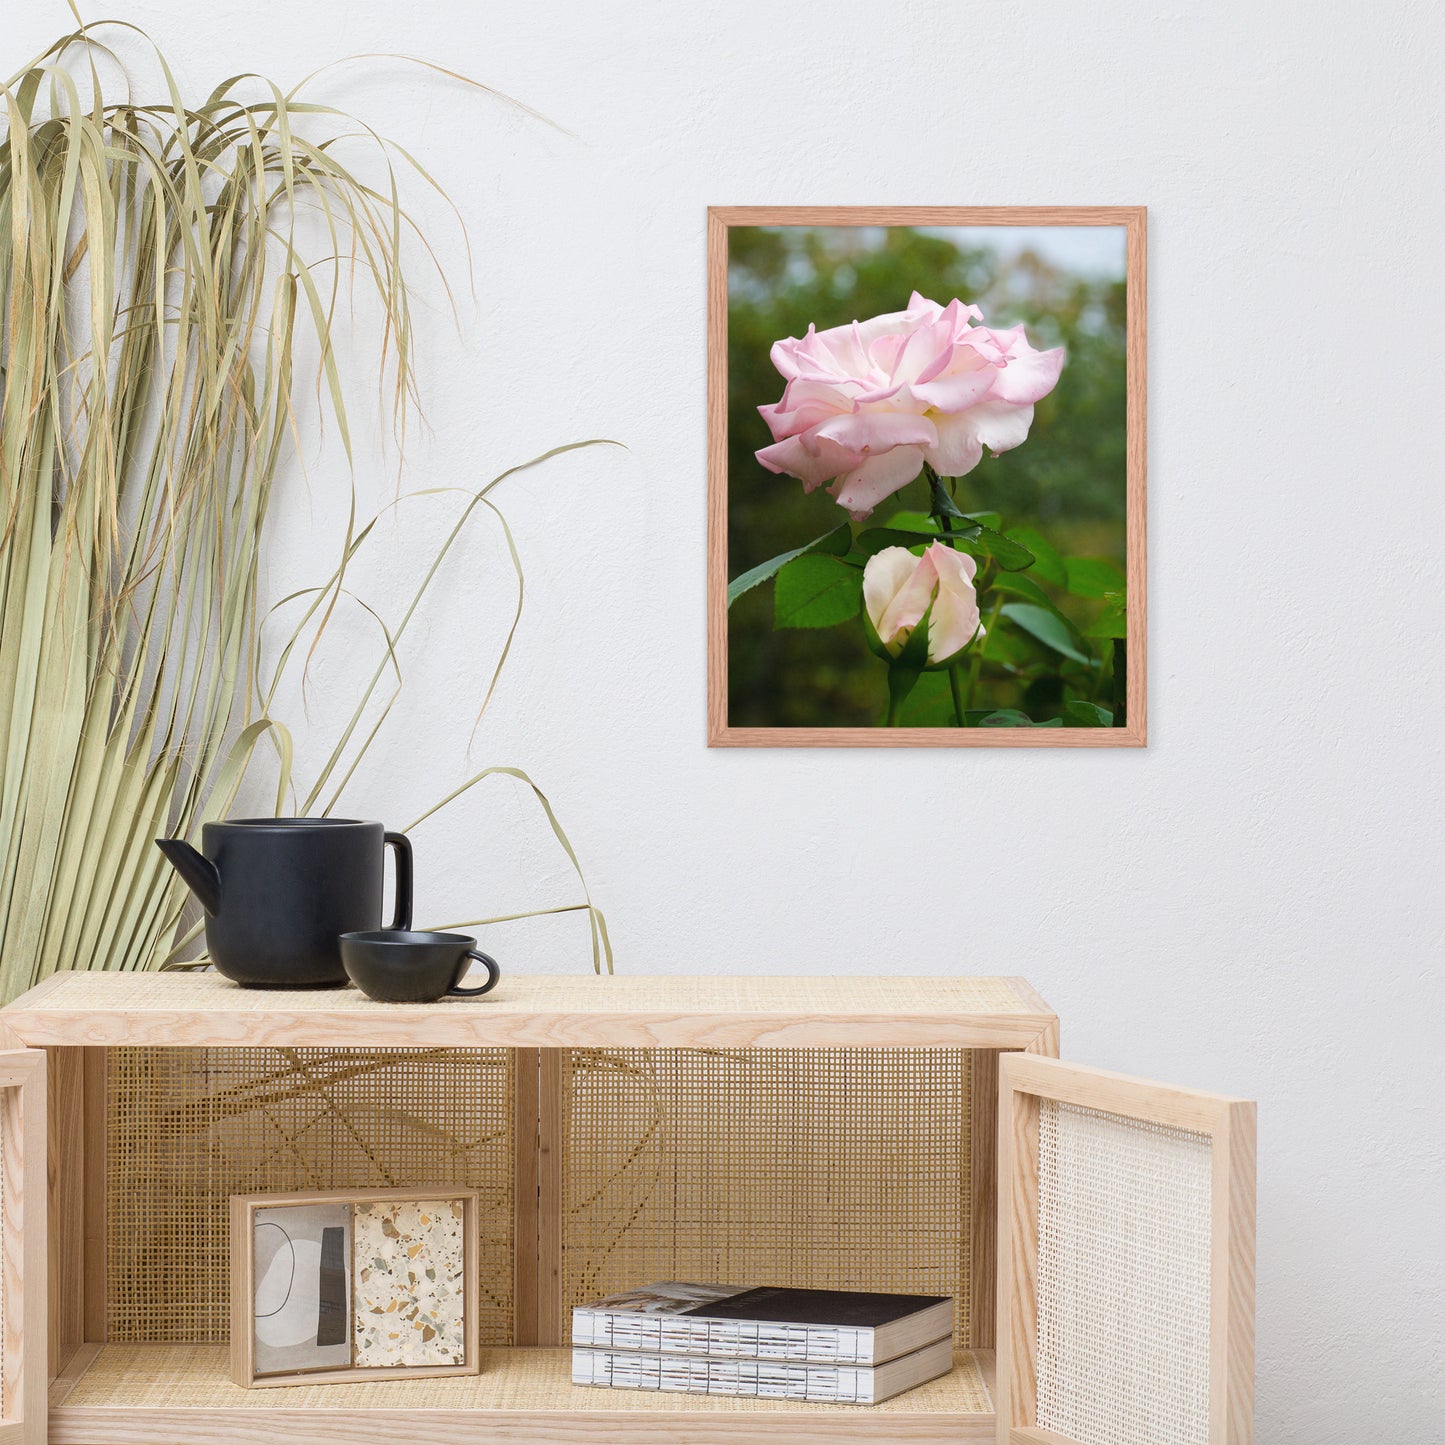 Framed Prints Floral: Admiration - Pink Rose Floral / Botanical / Nature Photo Framed Wall Art Print - Artwork - Wall Decor - Home Decor